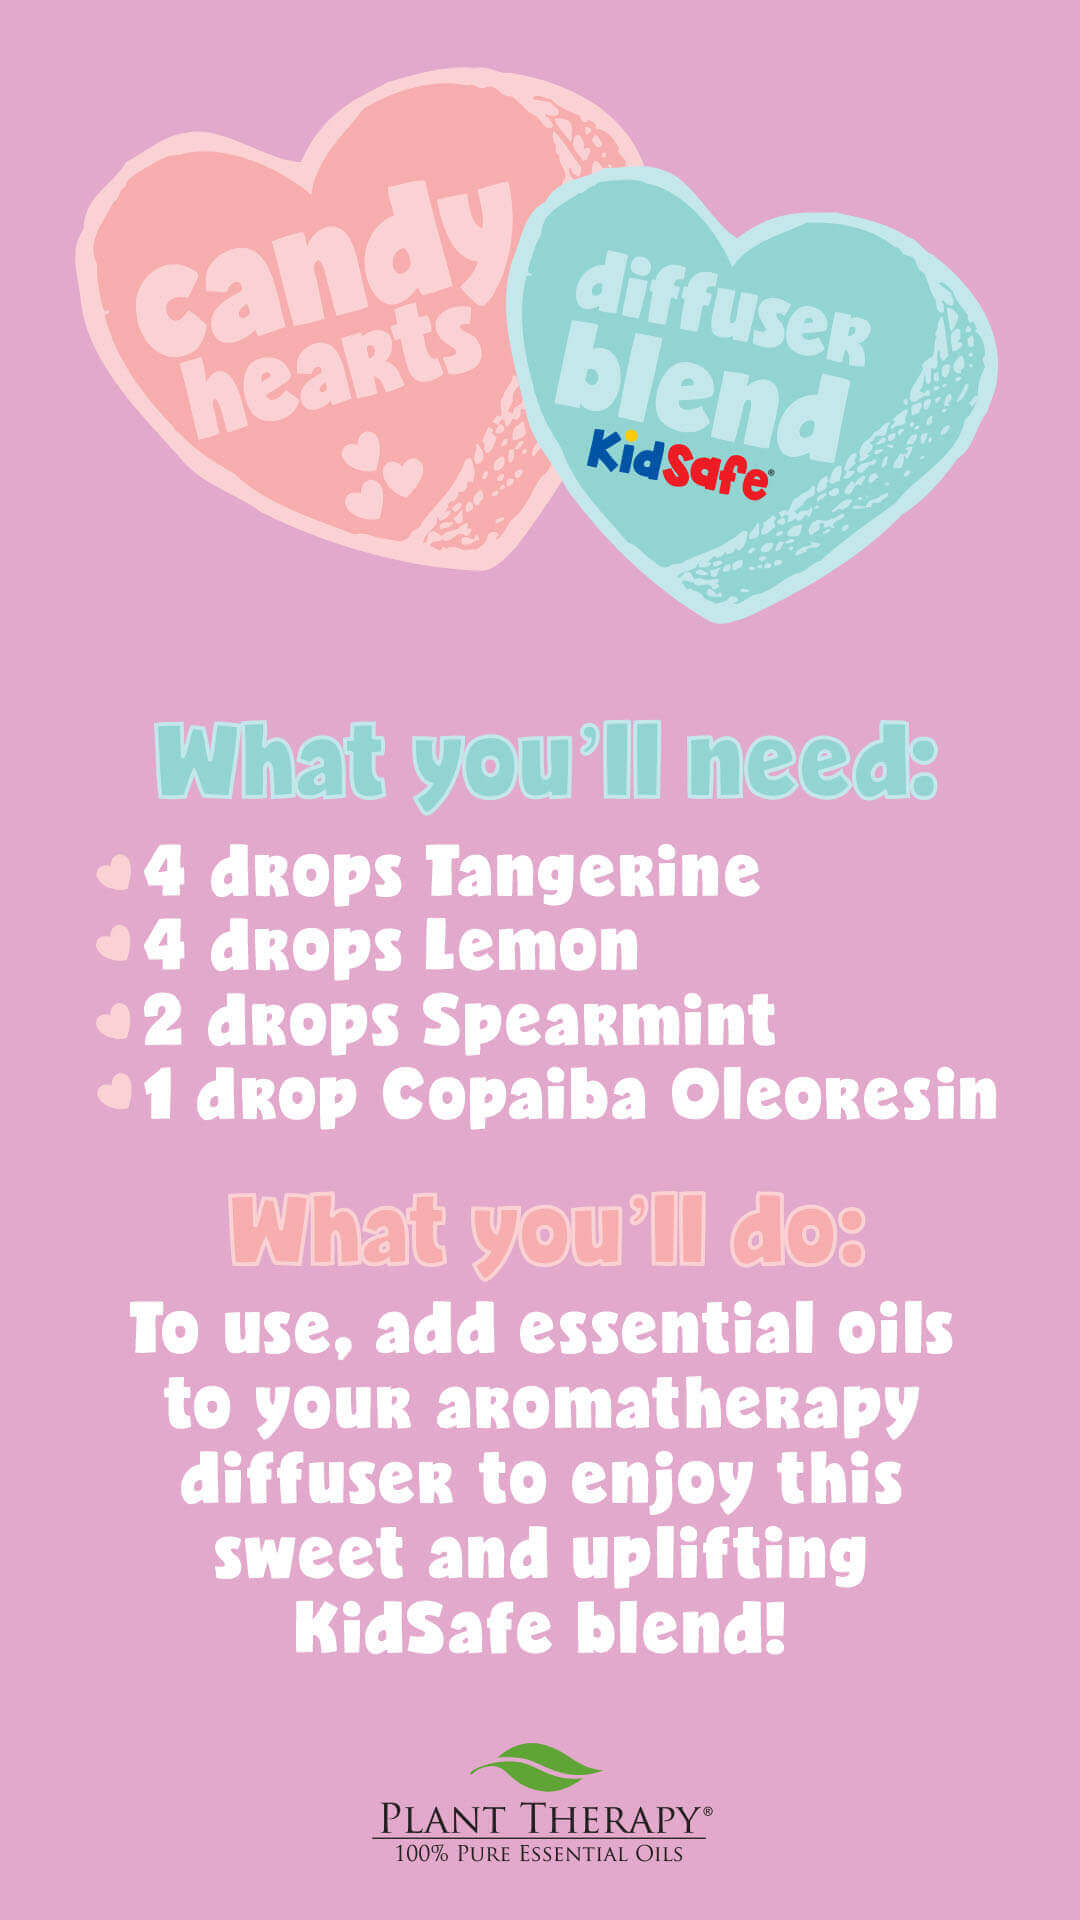 Therapeutic diffuser recipe using Copaiba Essential Oil self-care and relaxation